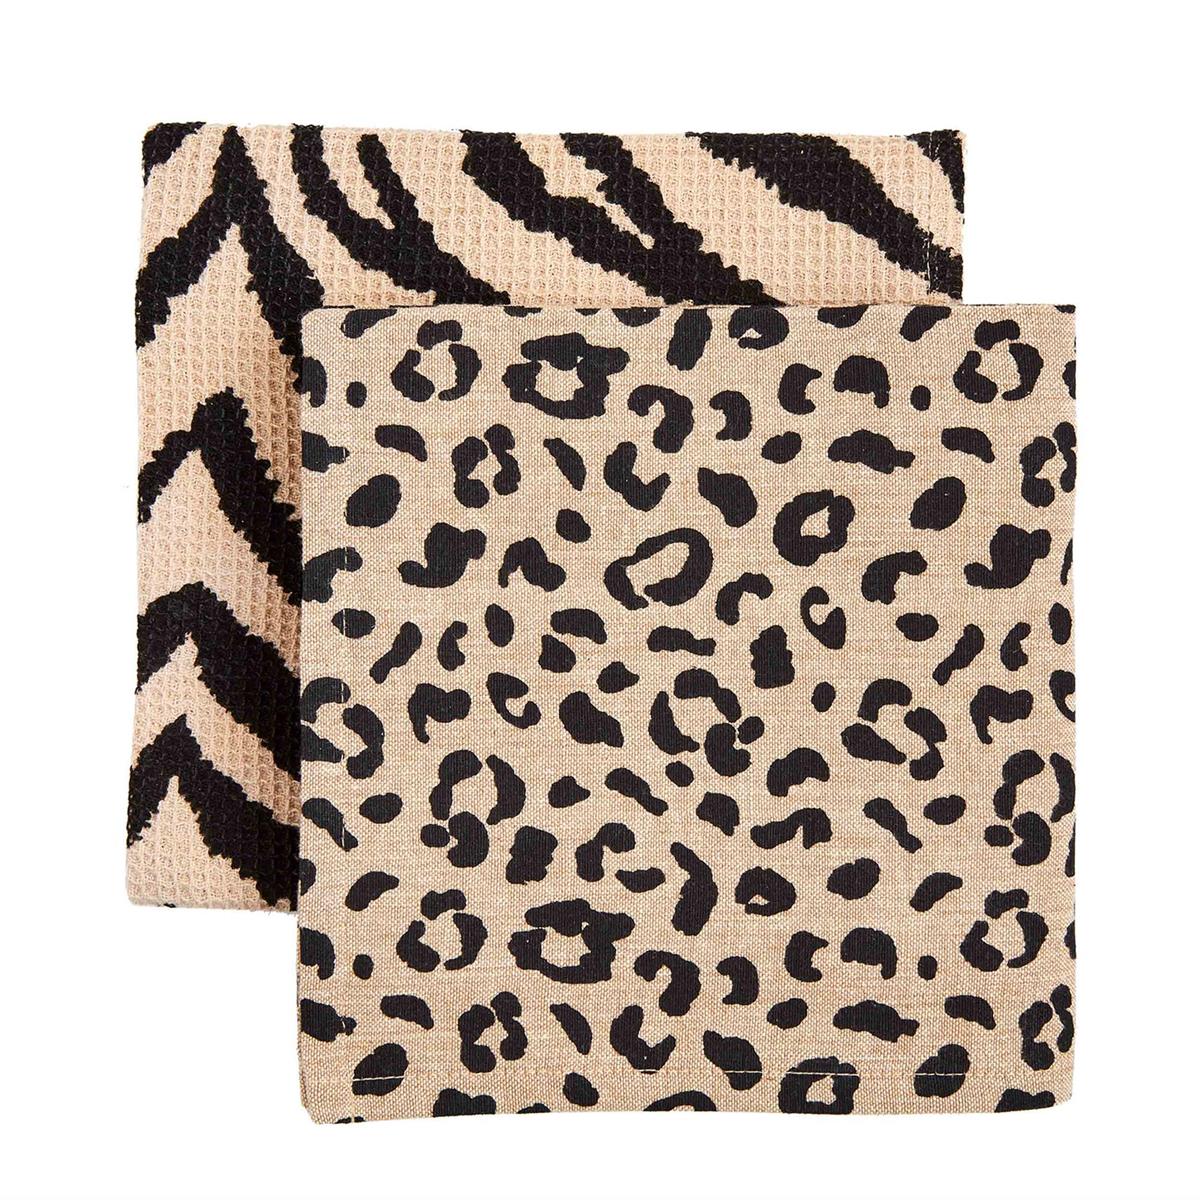 Mud Pie Animal Print Towel Set Zebra and Leopard